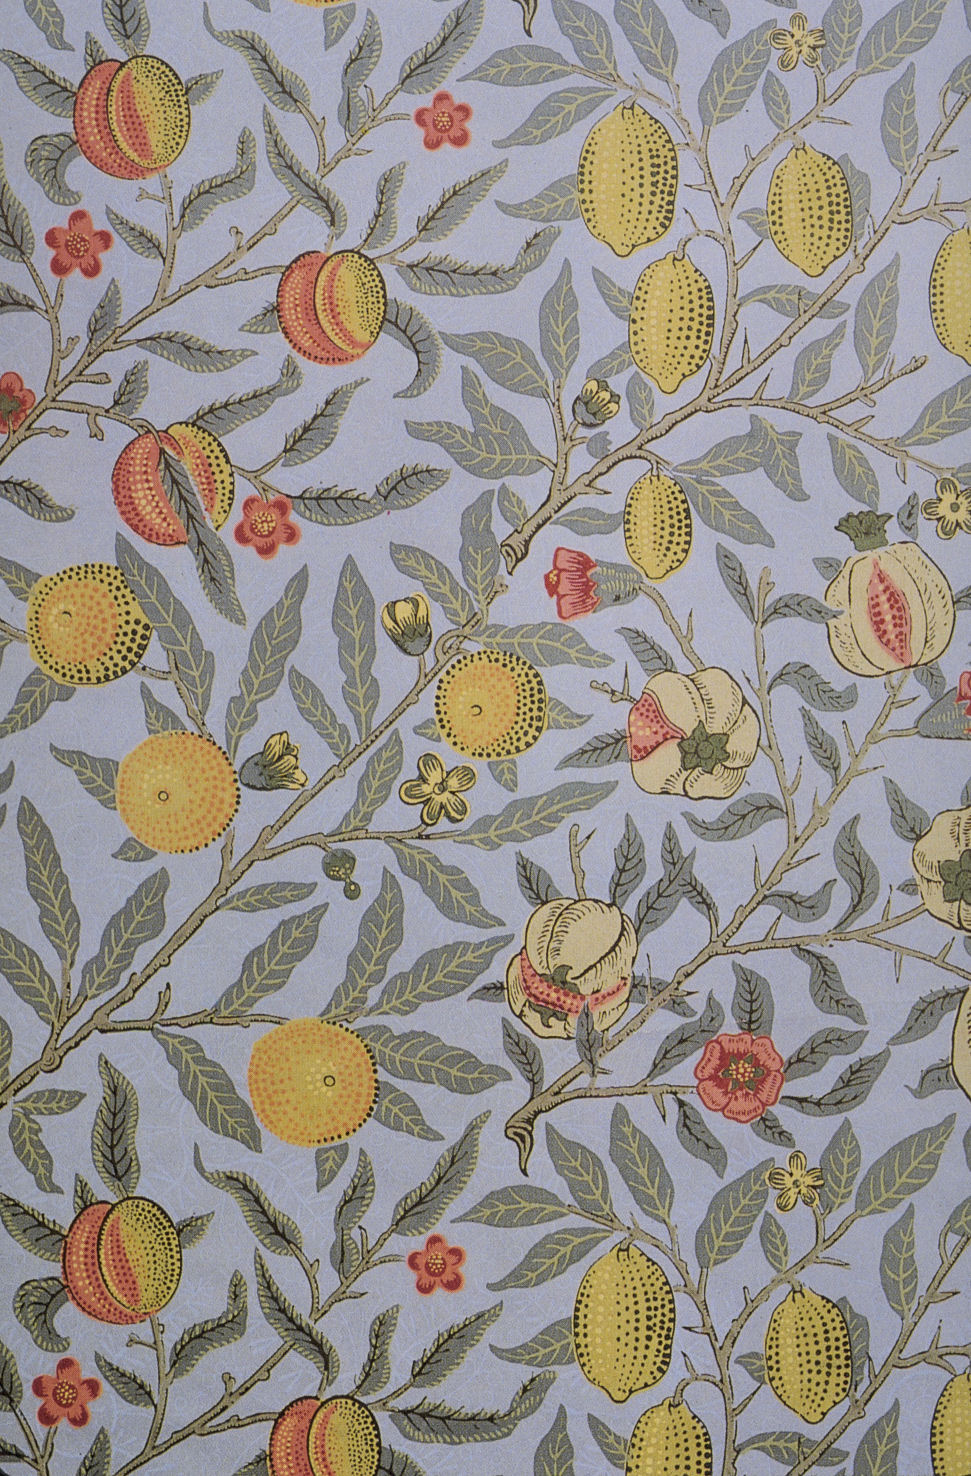 Fruit Or Pomegranate Wallpaper Designed By William Morris